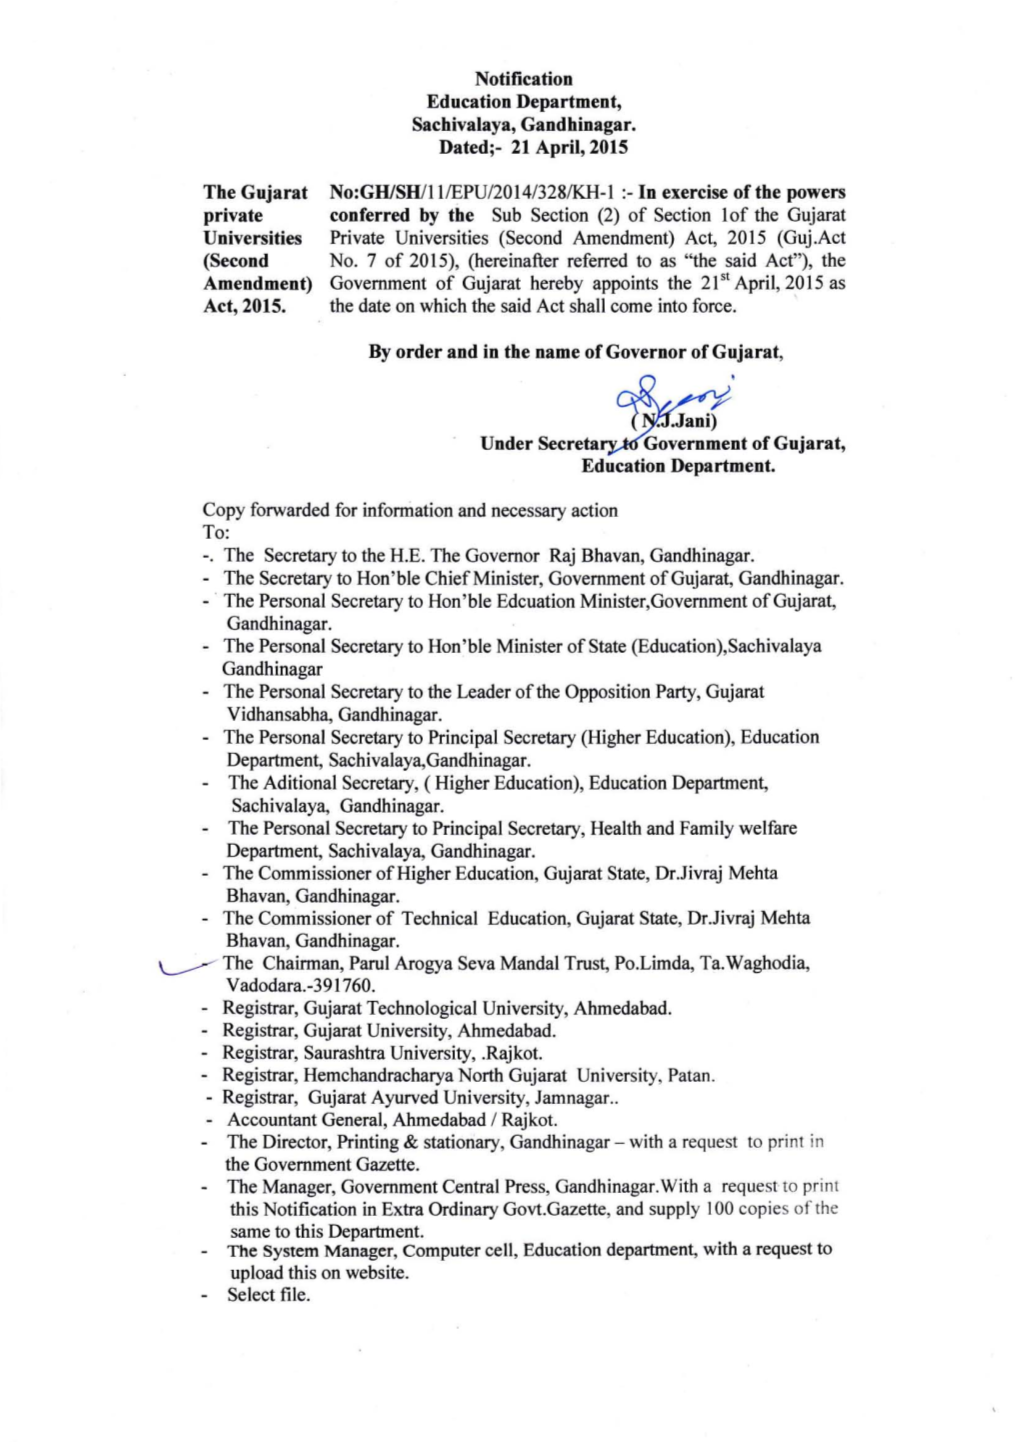 Tbe Gujarat Private Universities (Second Amendment) Act, 2015